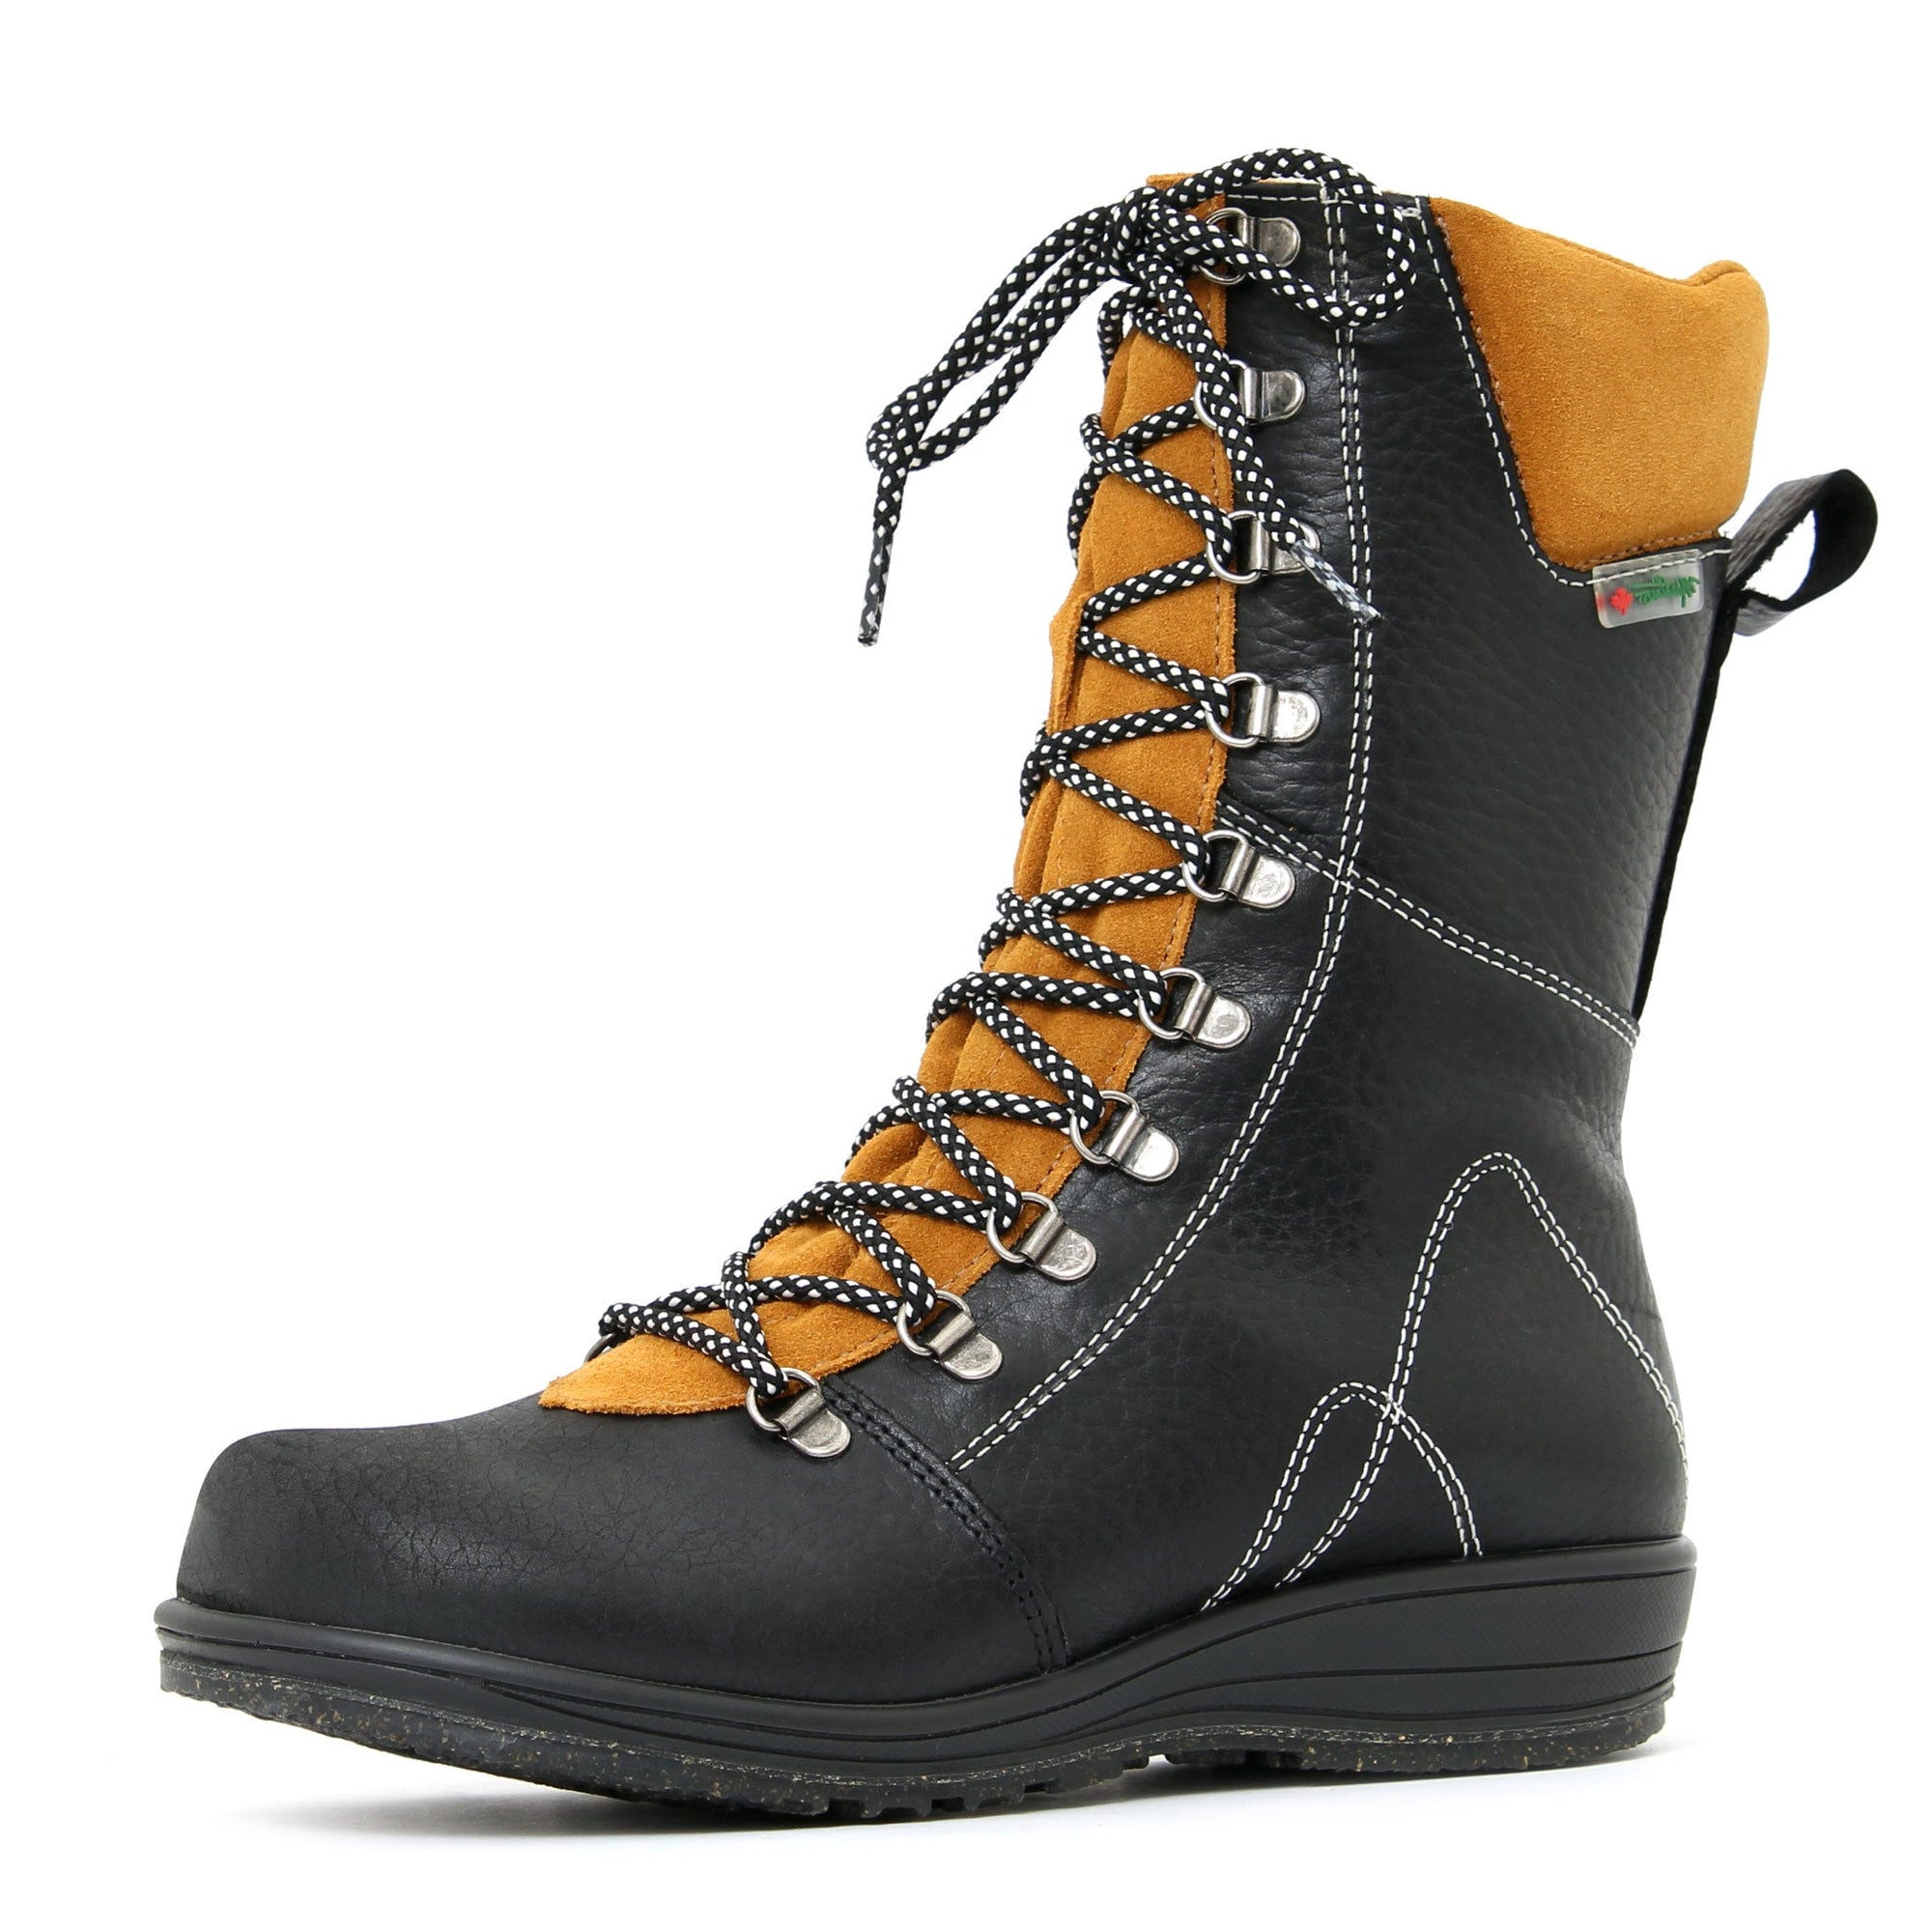 Banff winter boot for women - Black-Grey